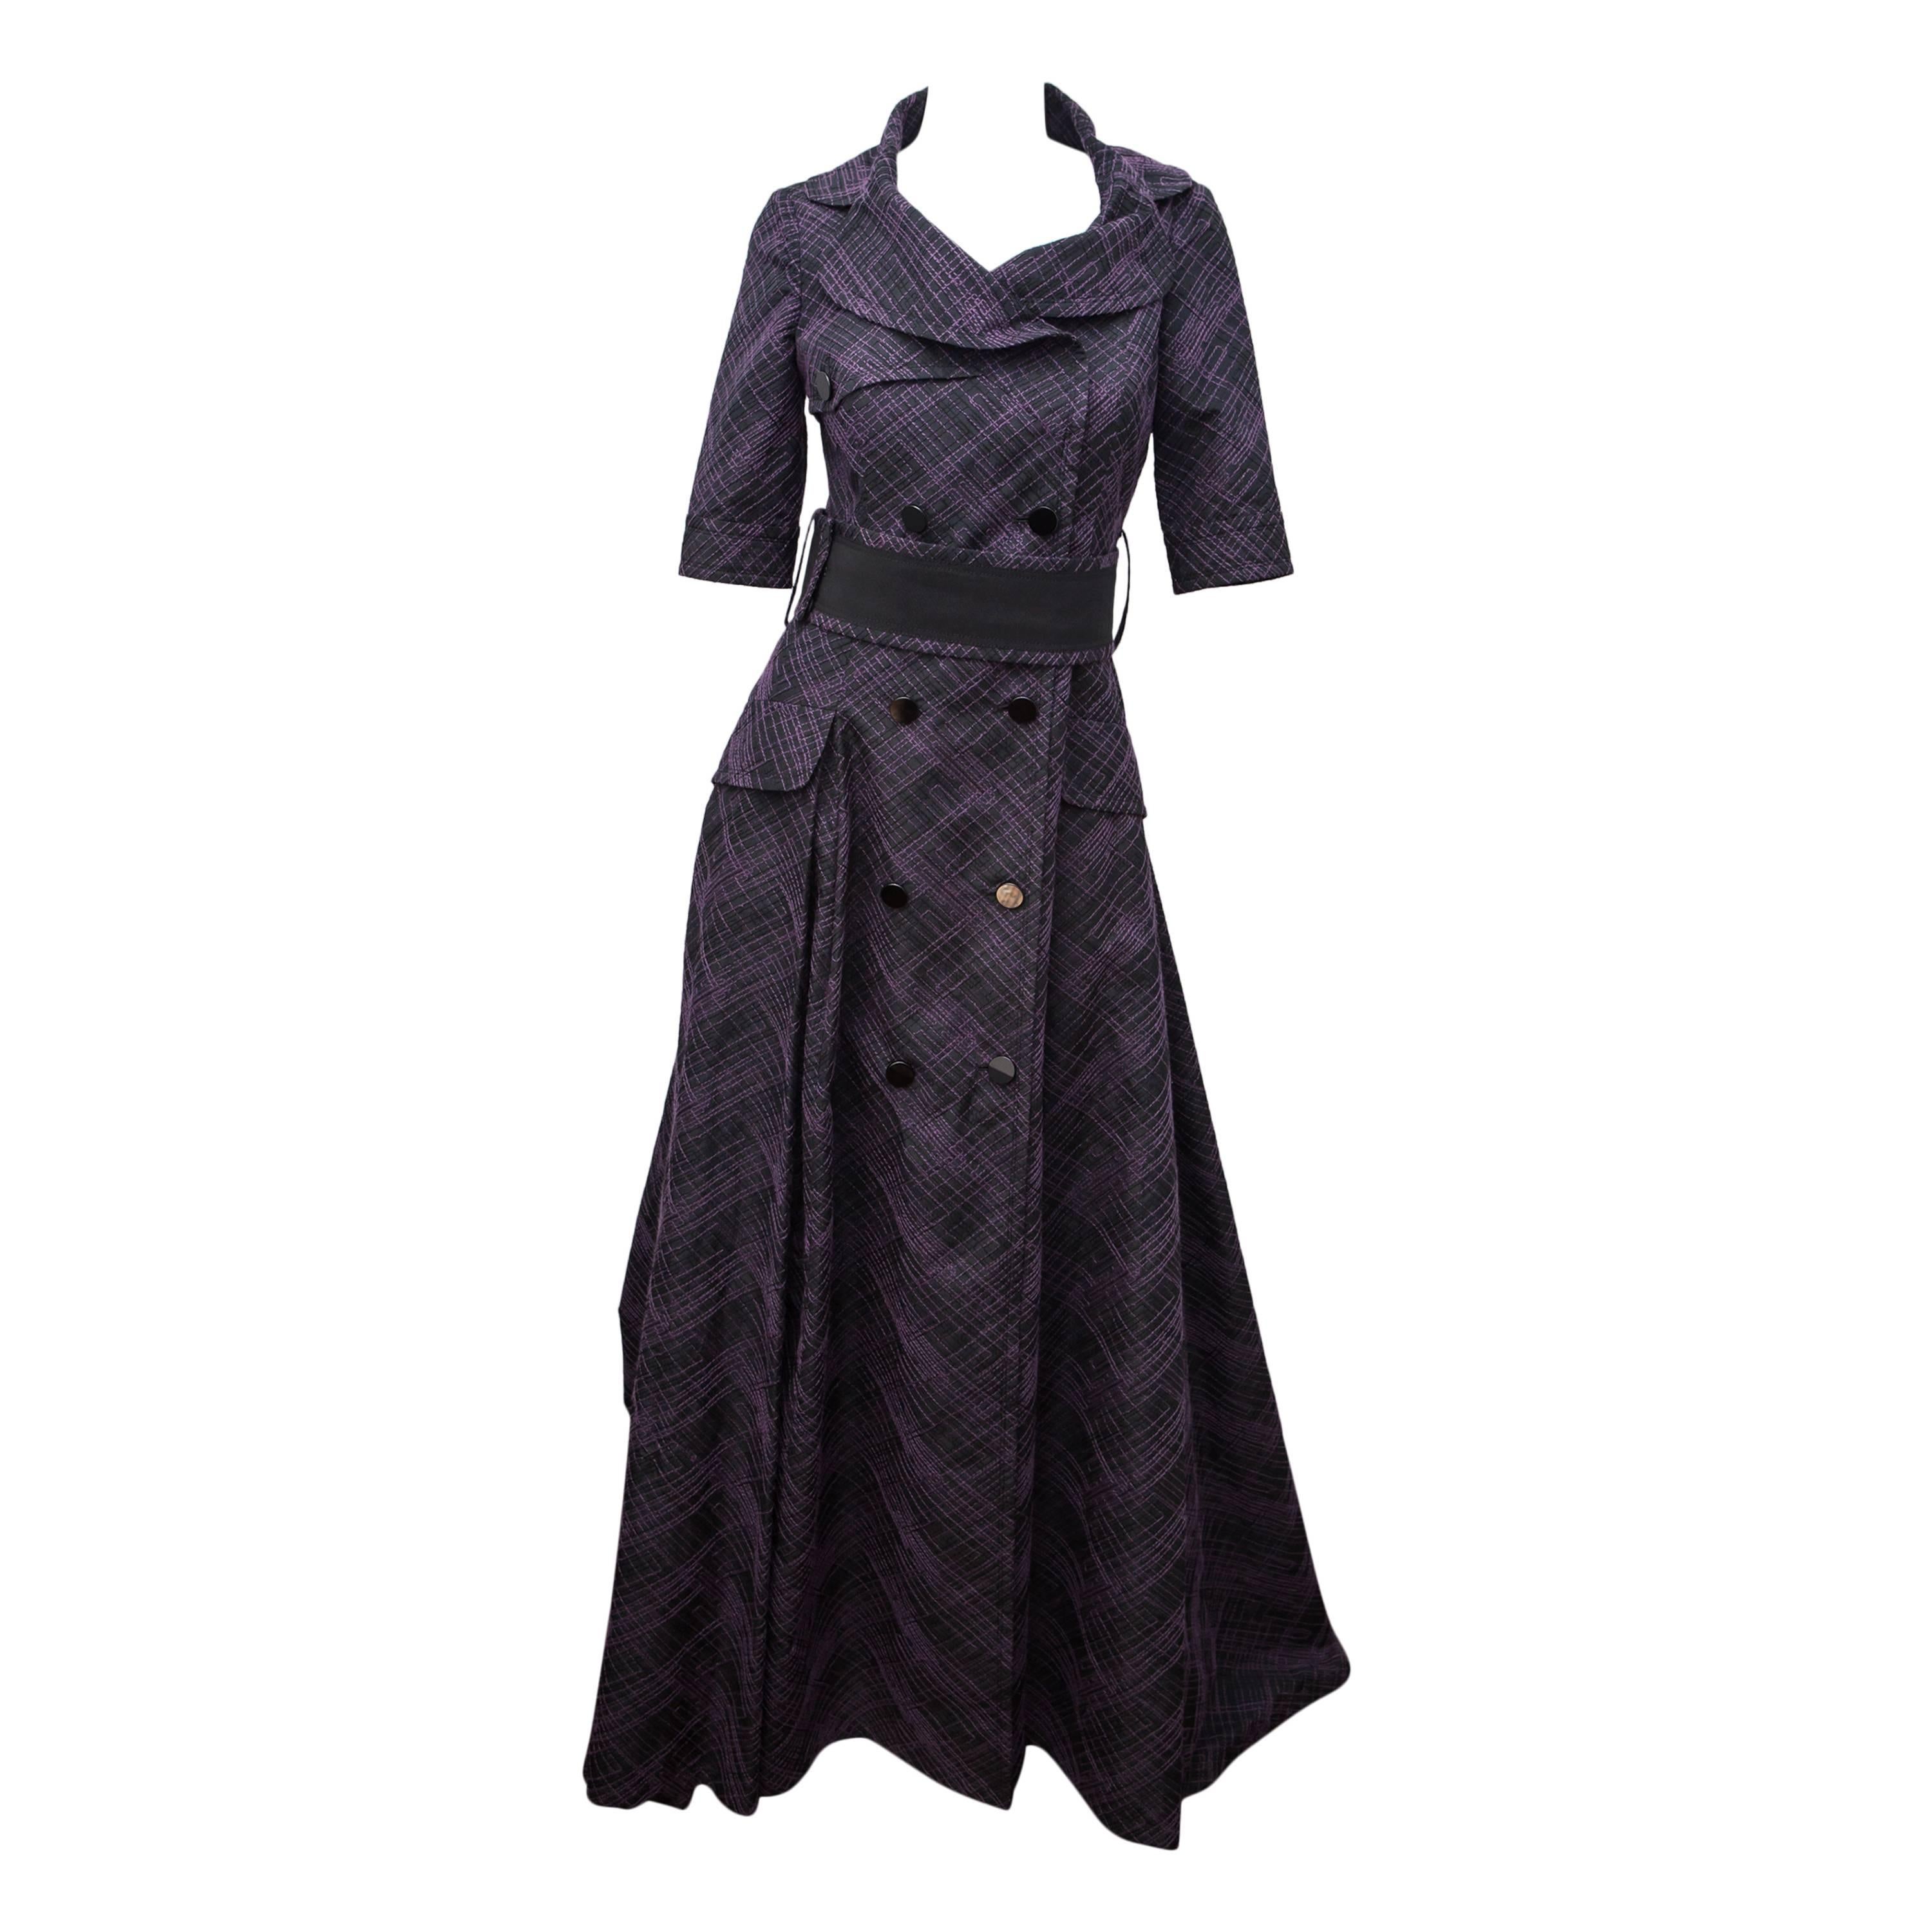 Carolina Herrera Purple and Black Patterned Gown